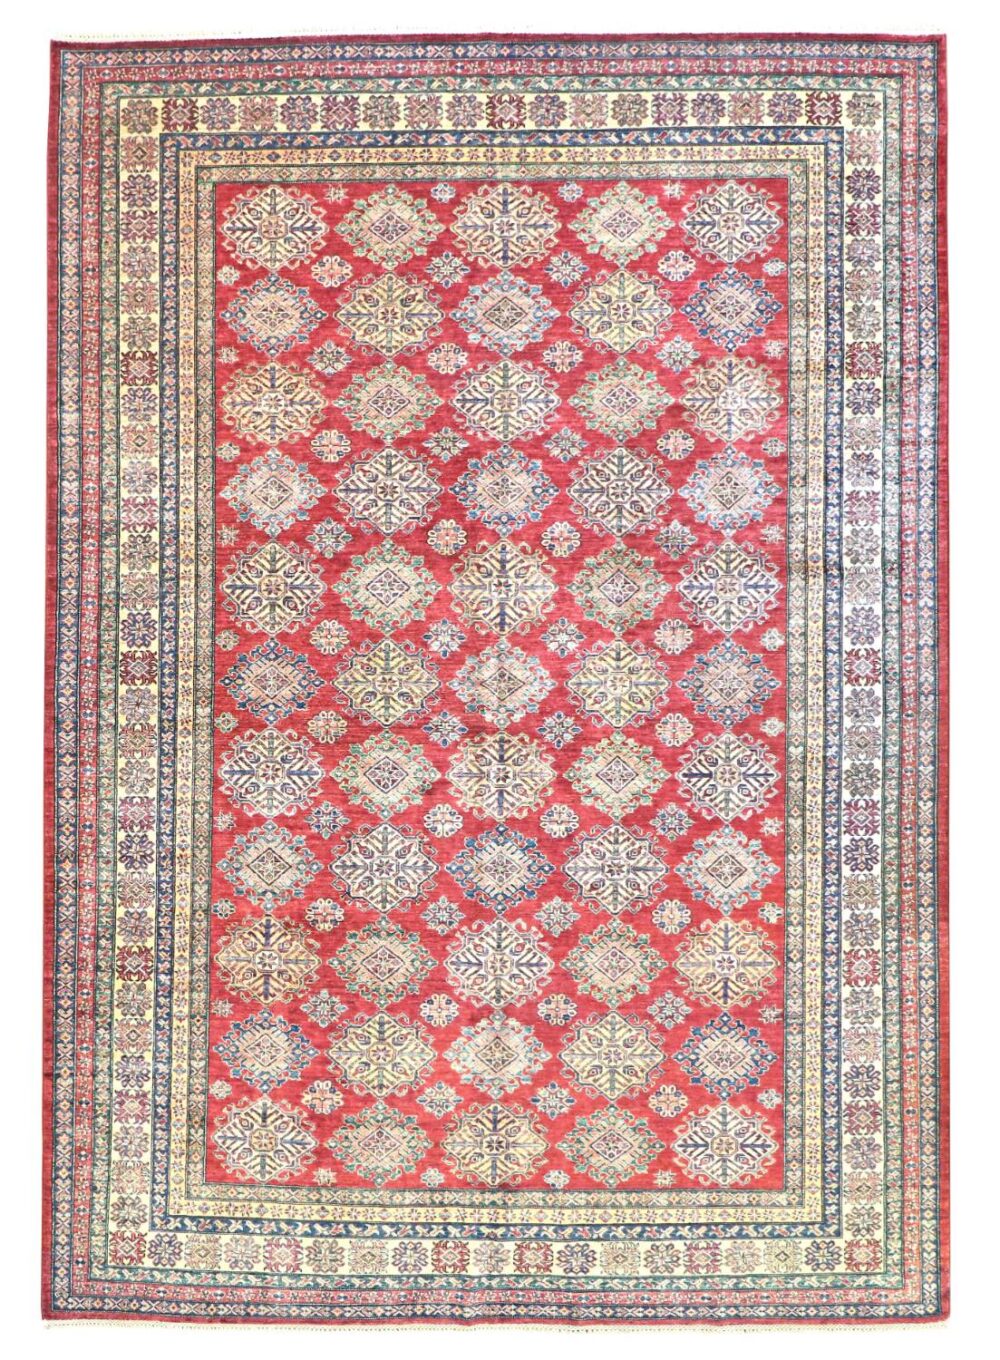 9 x 12 New Kazak Pakistan Wool Marvelous Area Rug Full size - pineville rug gallery - charlotte nc